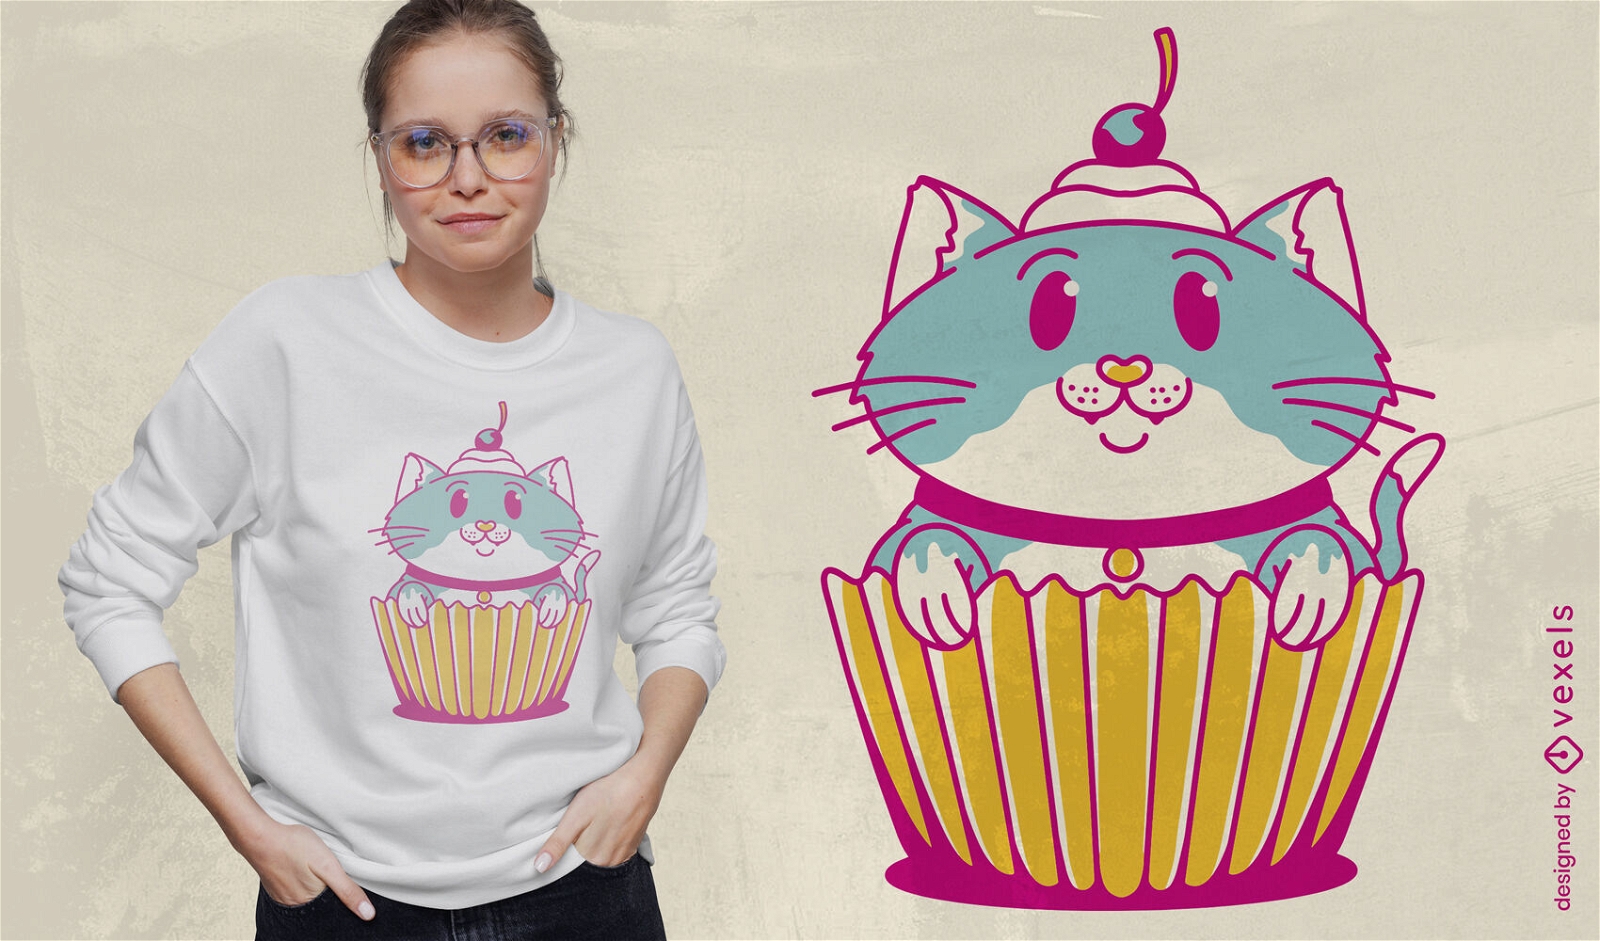 Sweet cupcake cat t-shirt design